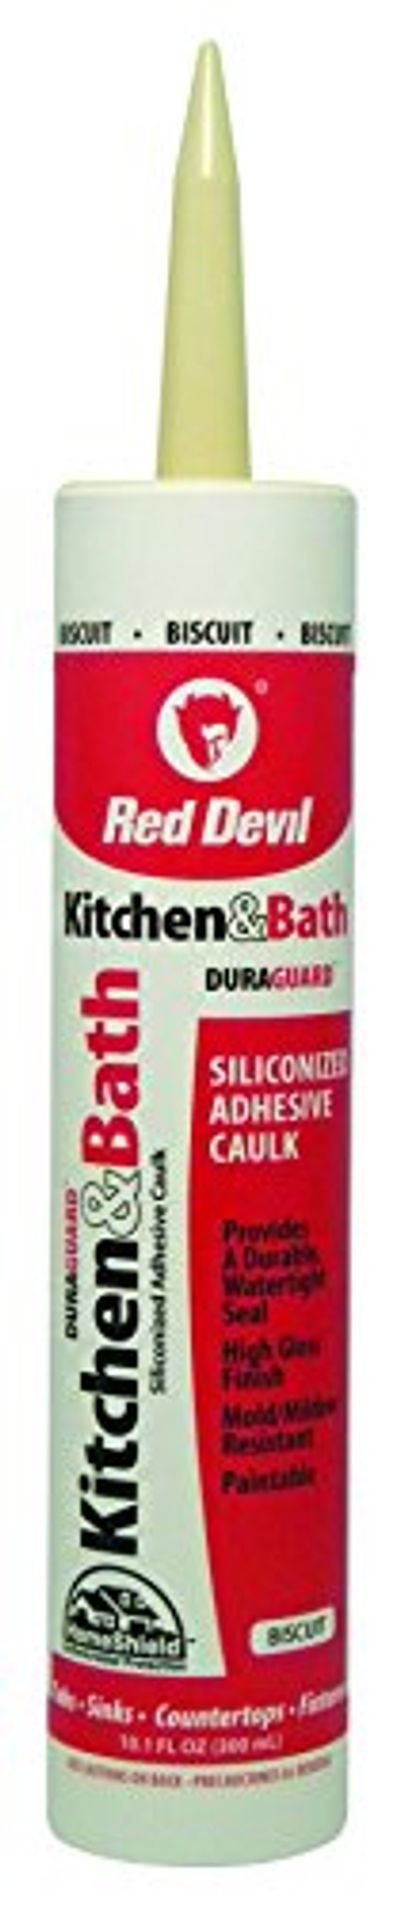 Red Devil 040620 Kitchen and Bath Siliconized Acrylic Caulk, Almond, 10.1-Ounce $8.94 (Reg $17.07)